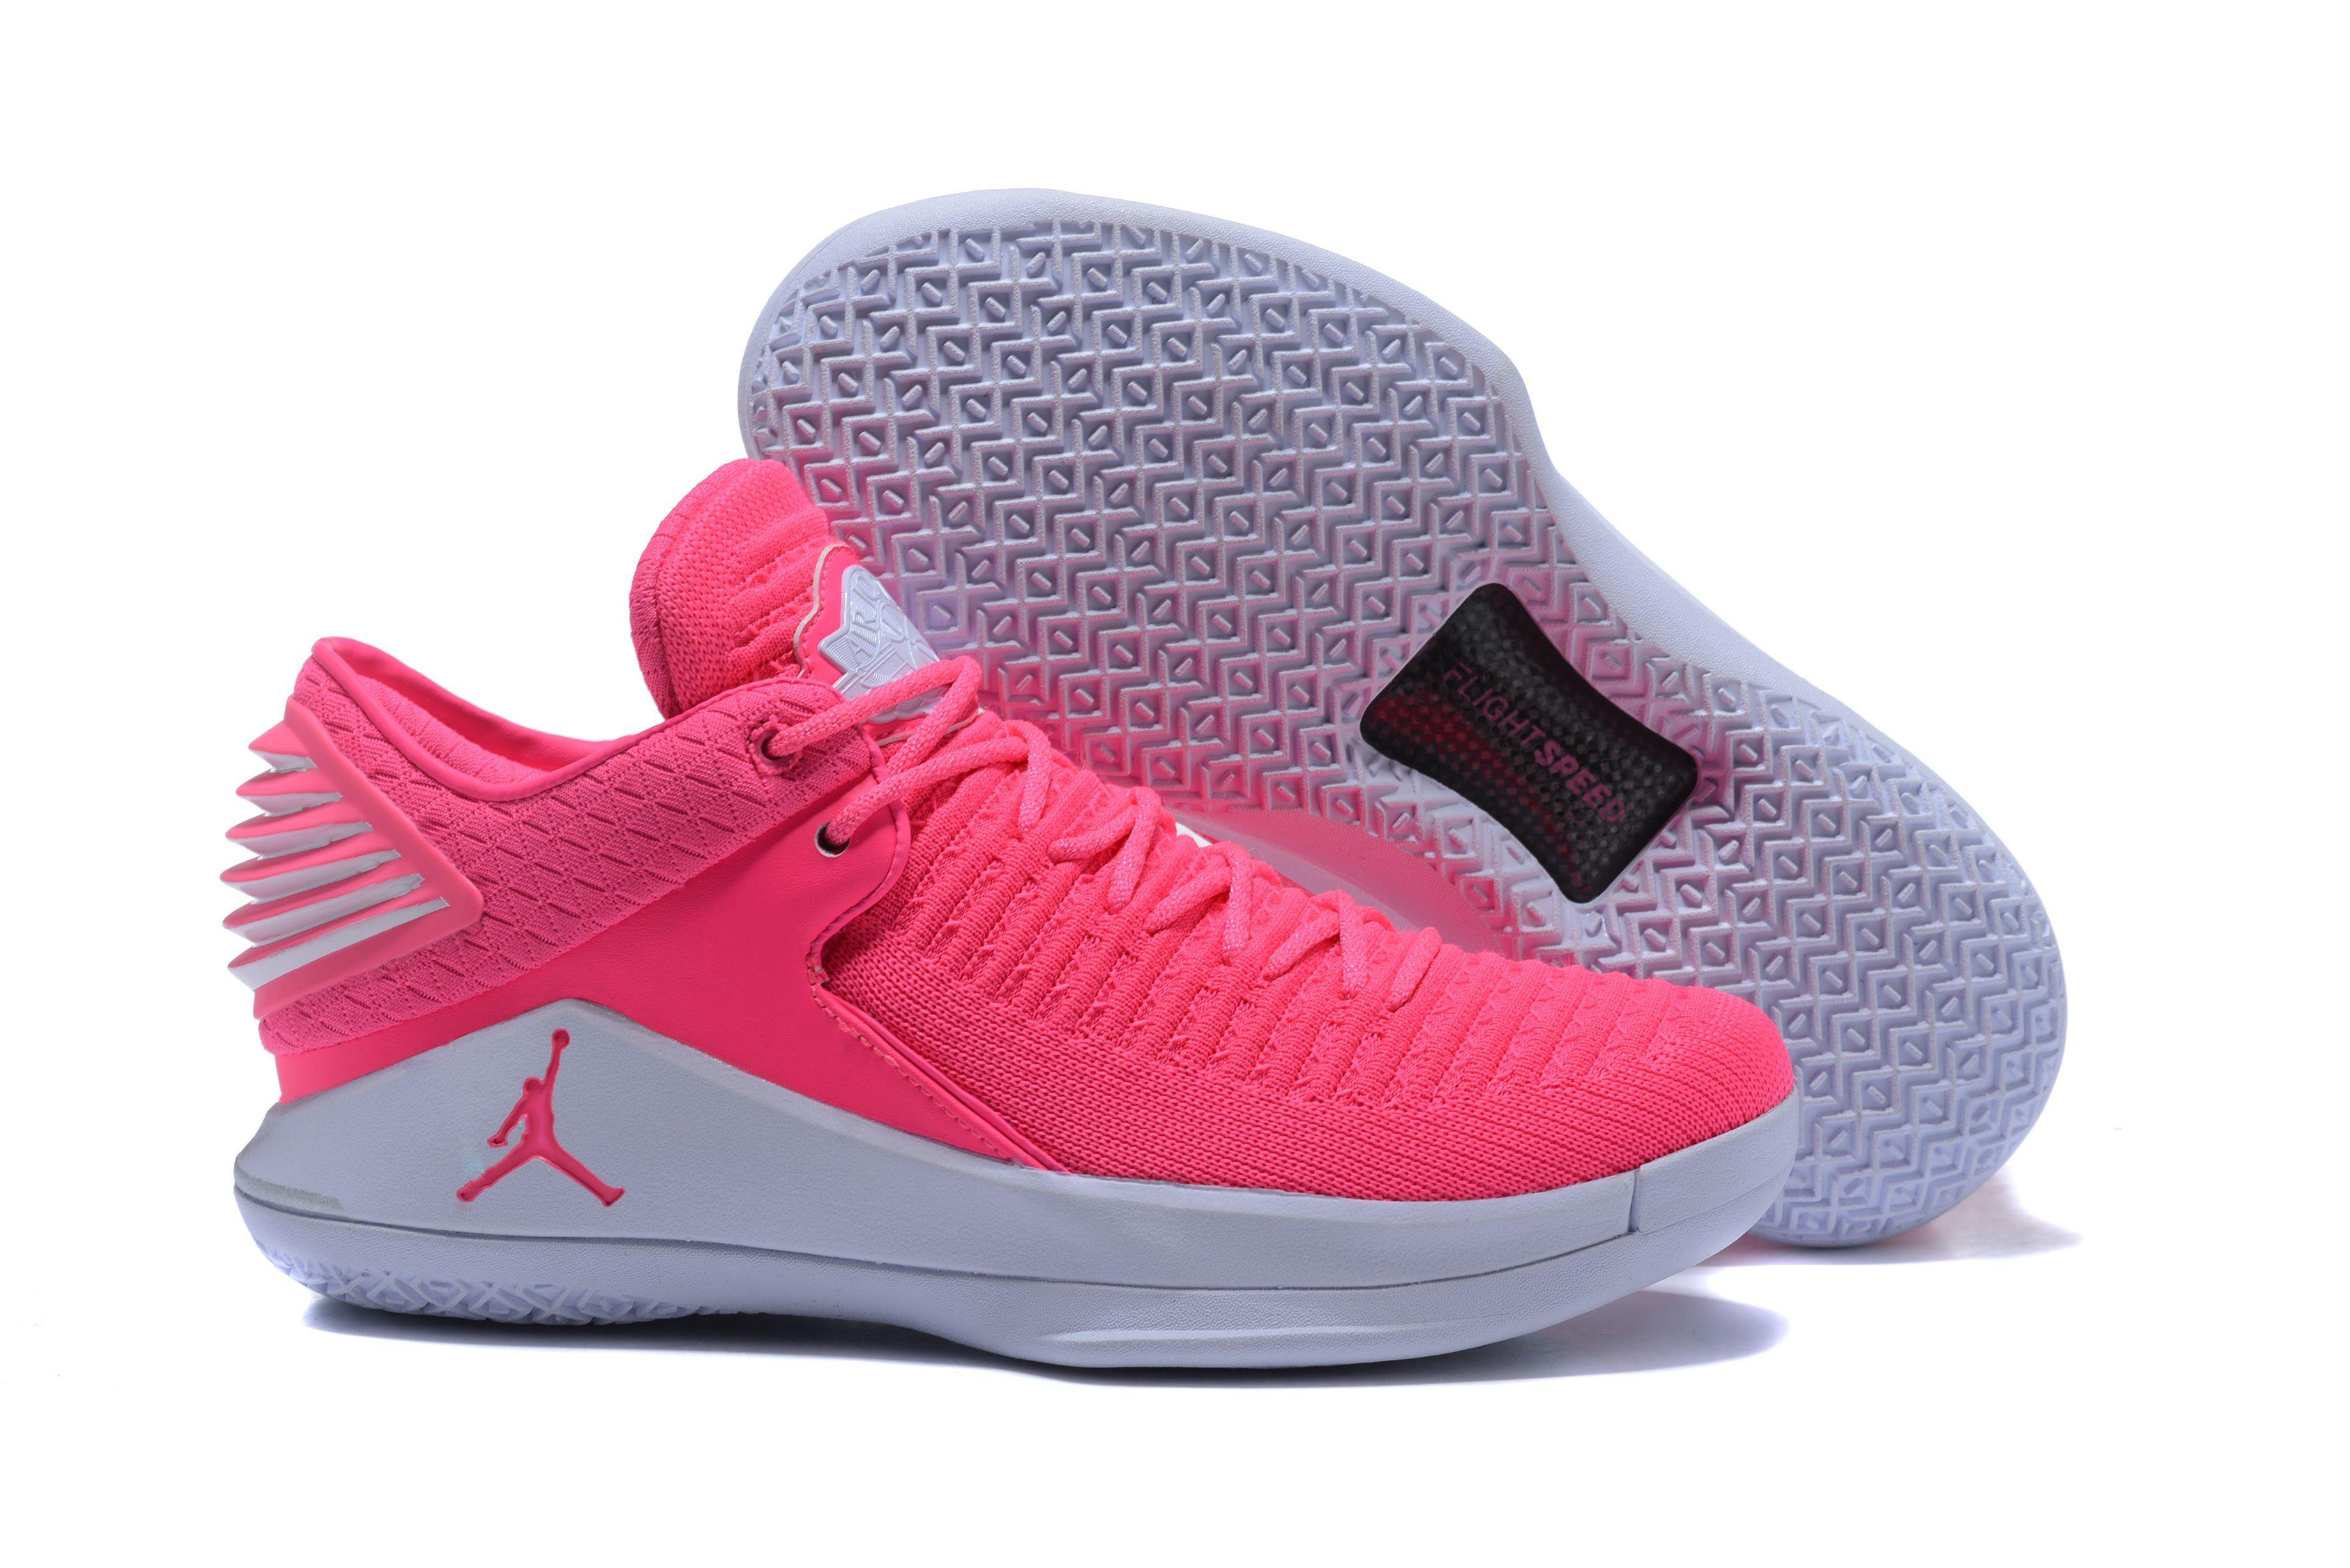 Hot Pink Jordan Logo - Jimmy Butler Air Jordan 32 Low “Hot Pink” Cheap. Jordans